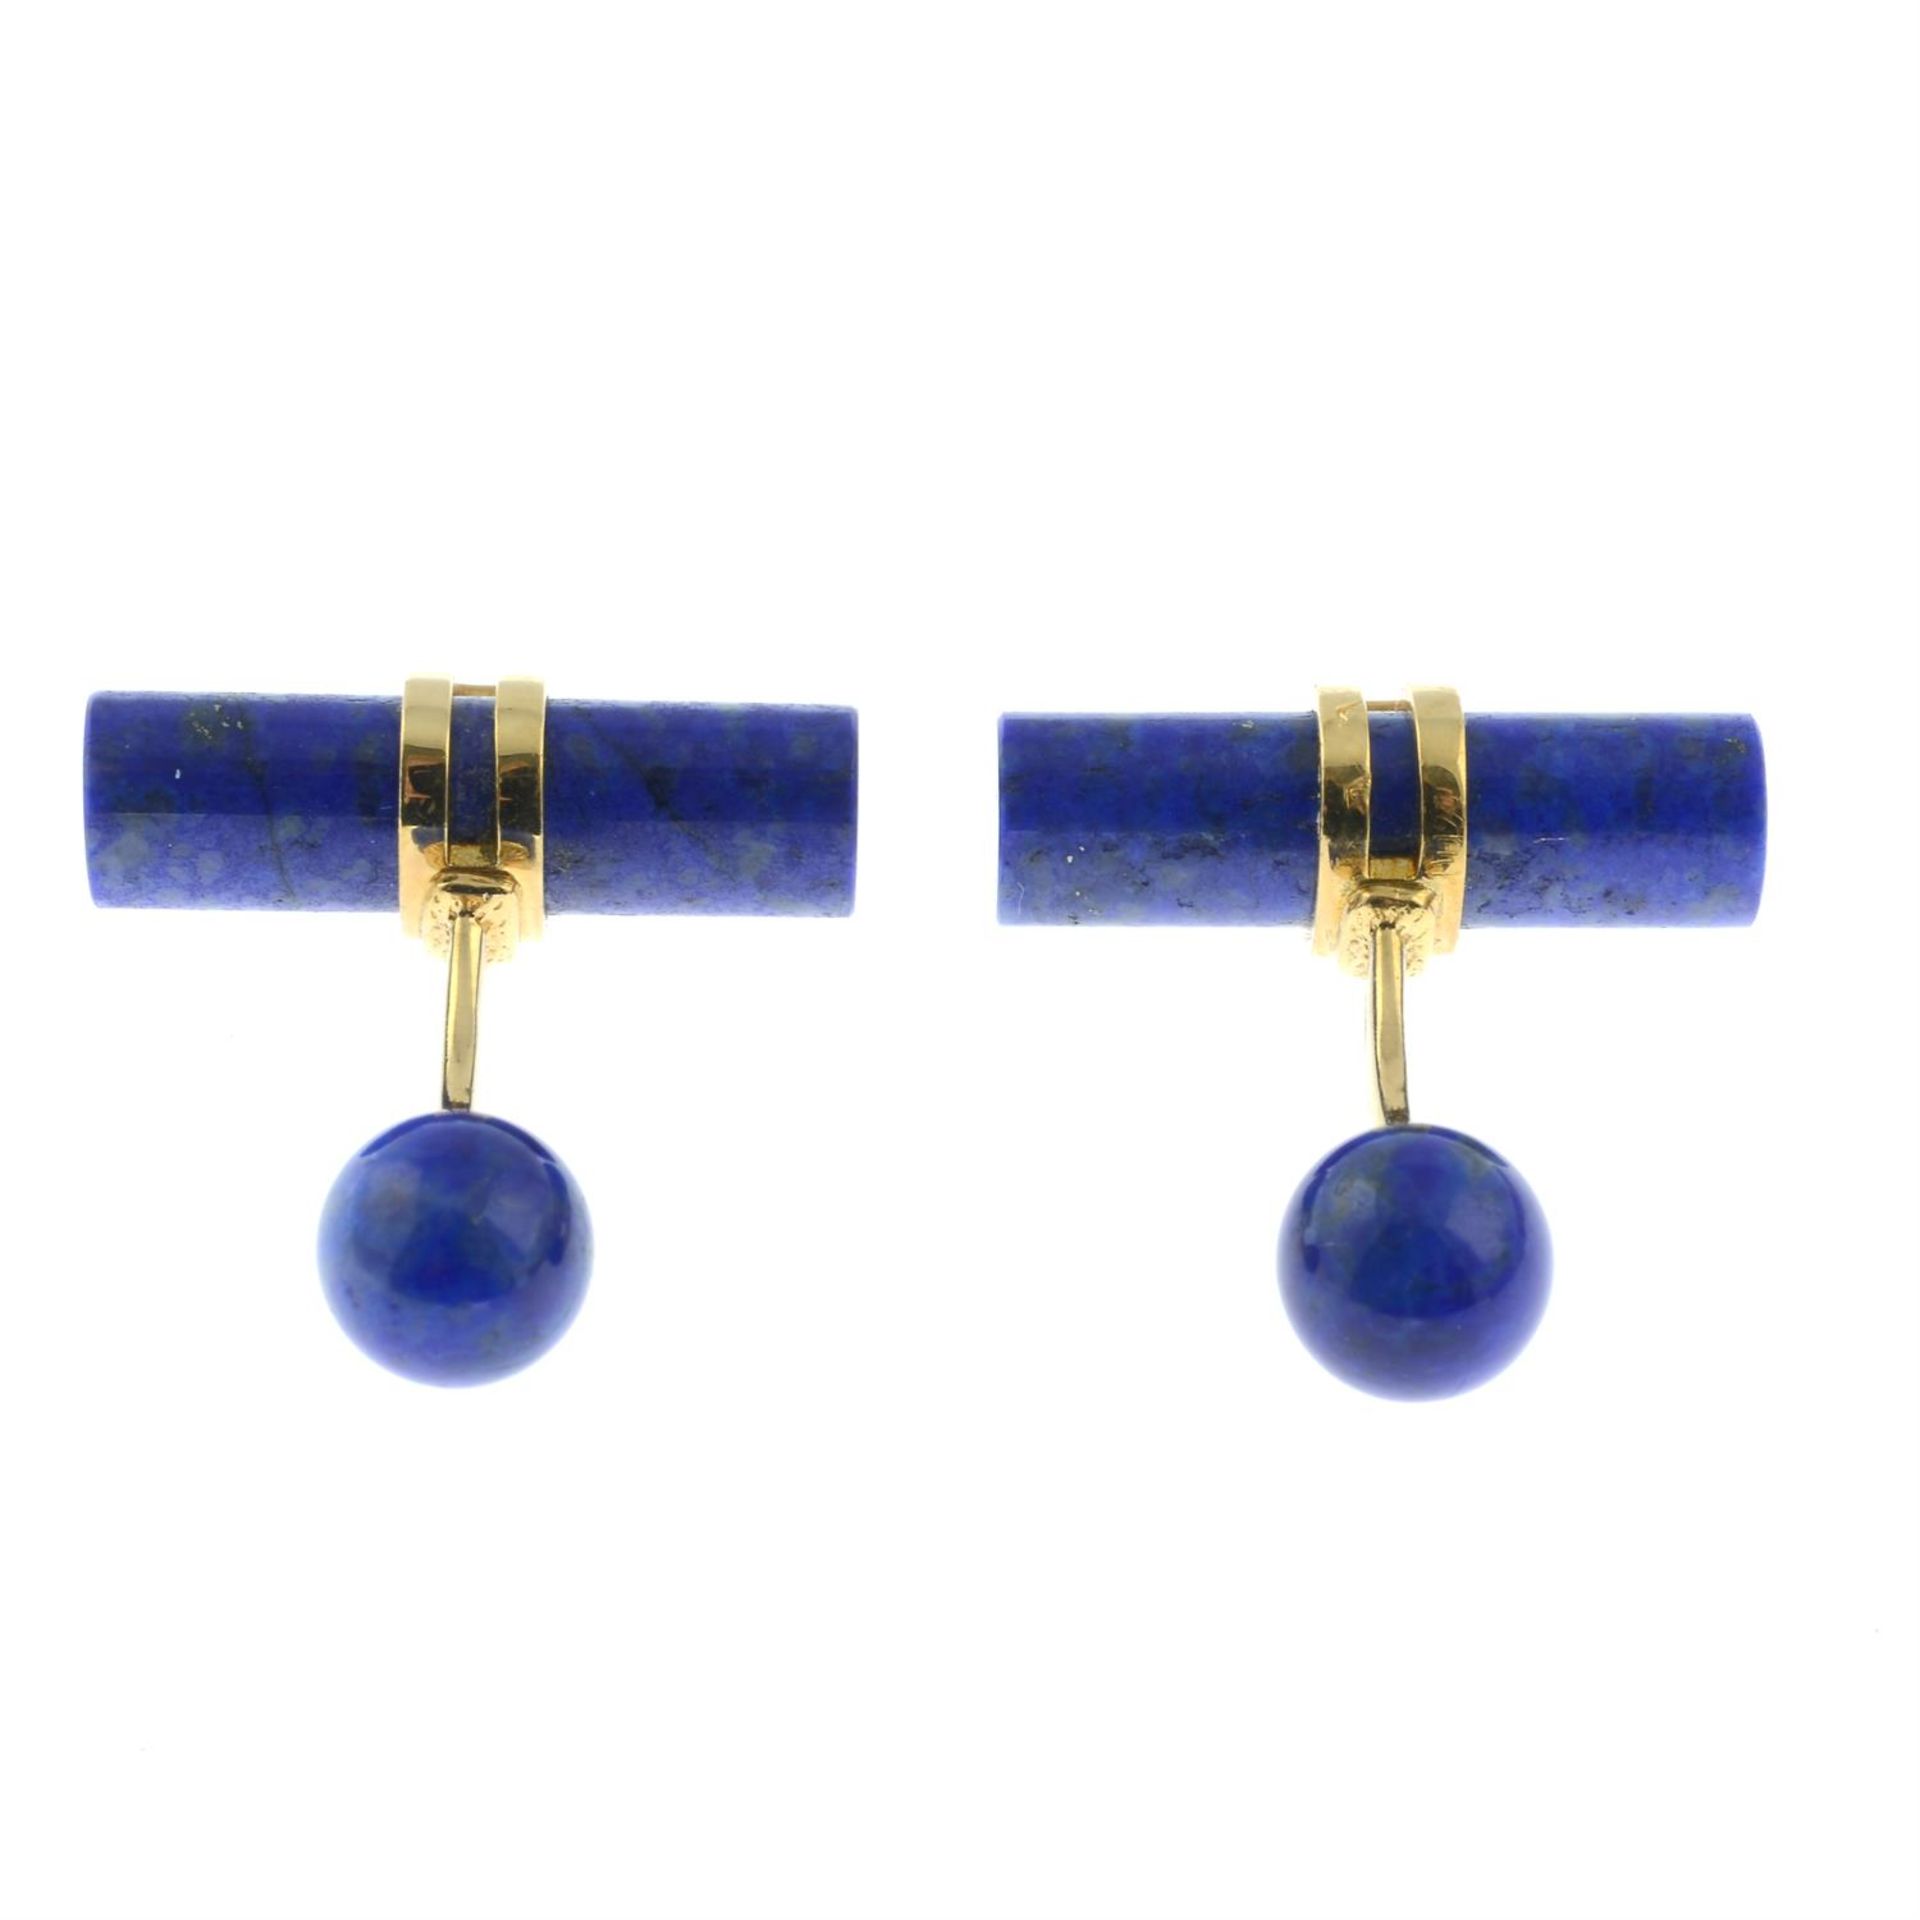 A pair of lapis lazuli cufflinks, by Hermès. - Image 4 of 4